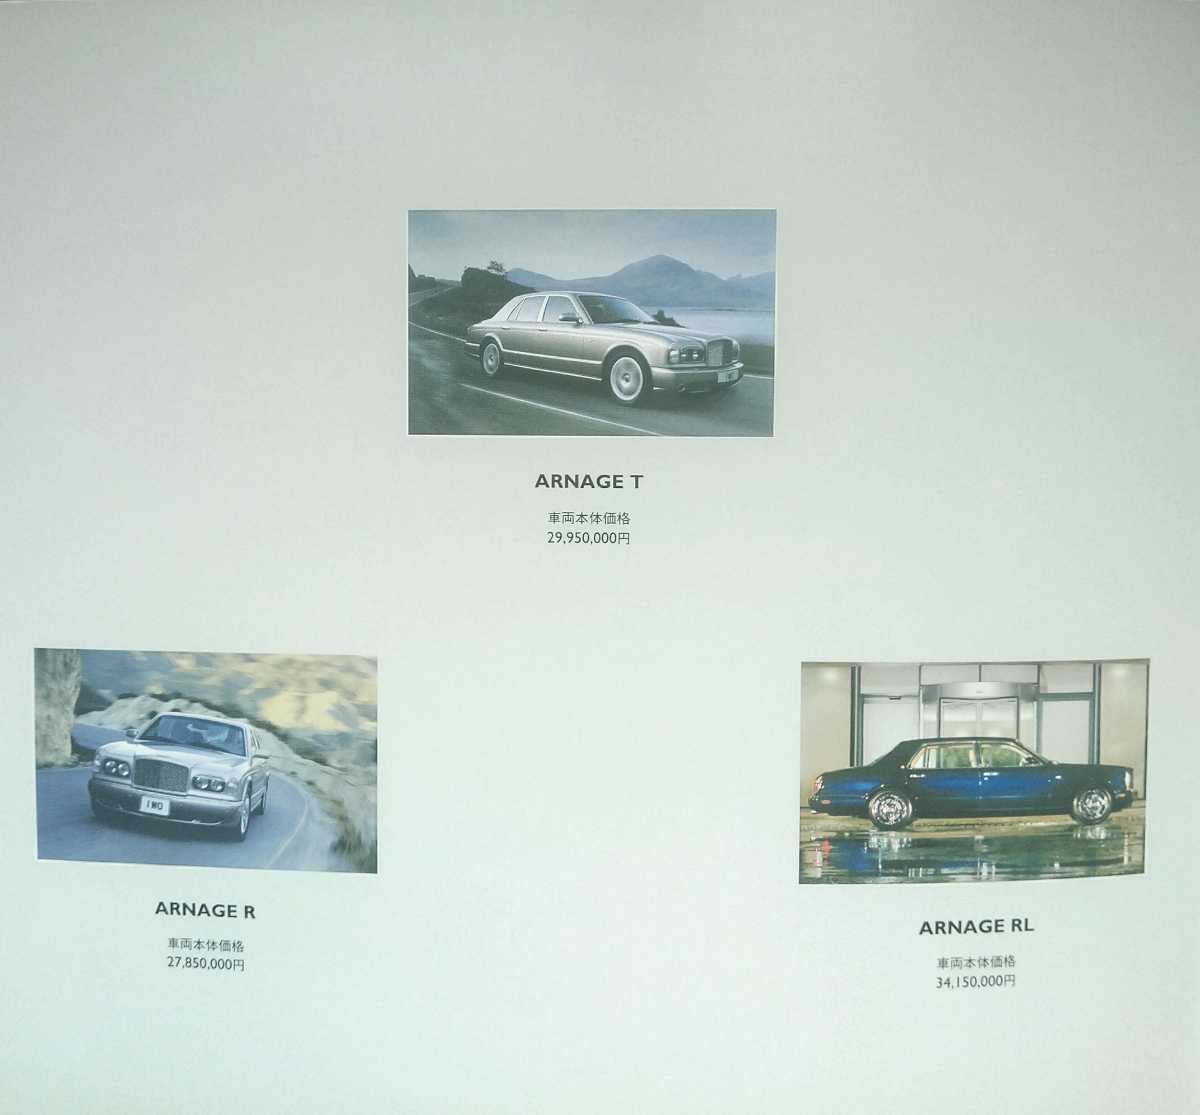 BENTLEY Prices and Specification Bentley цена / различные изначальный 2003 год 